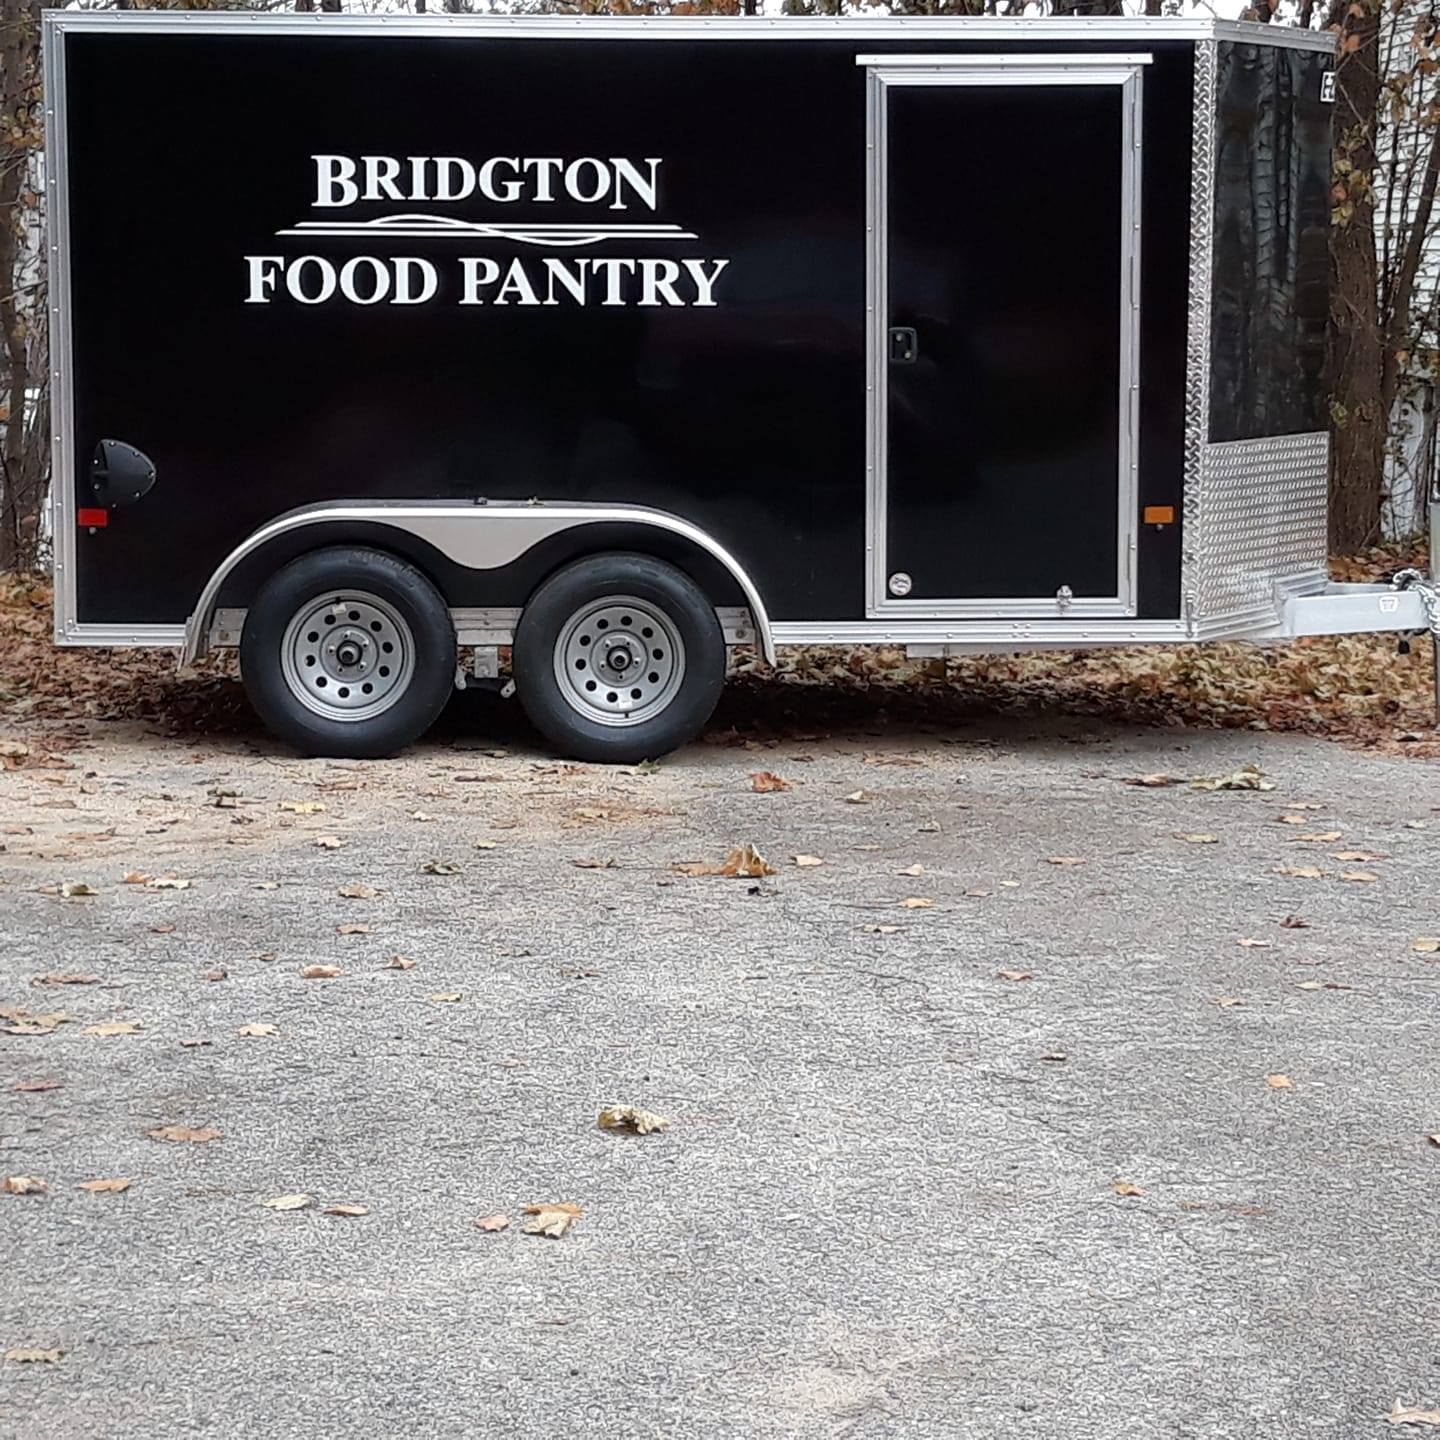 Bridgton Food Pantry